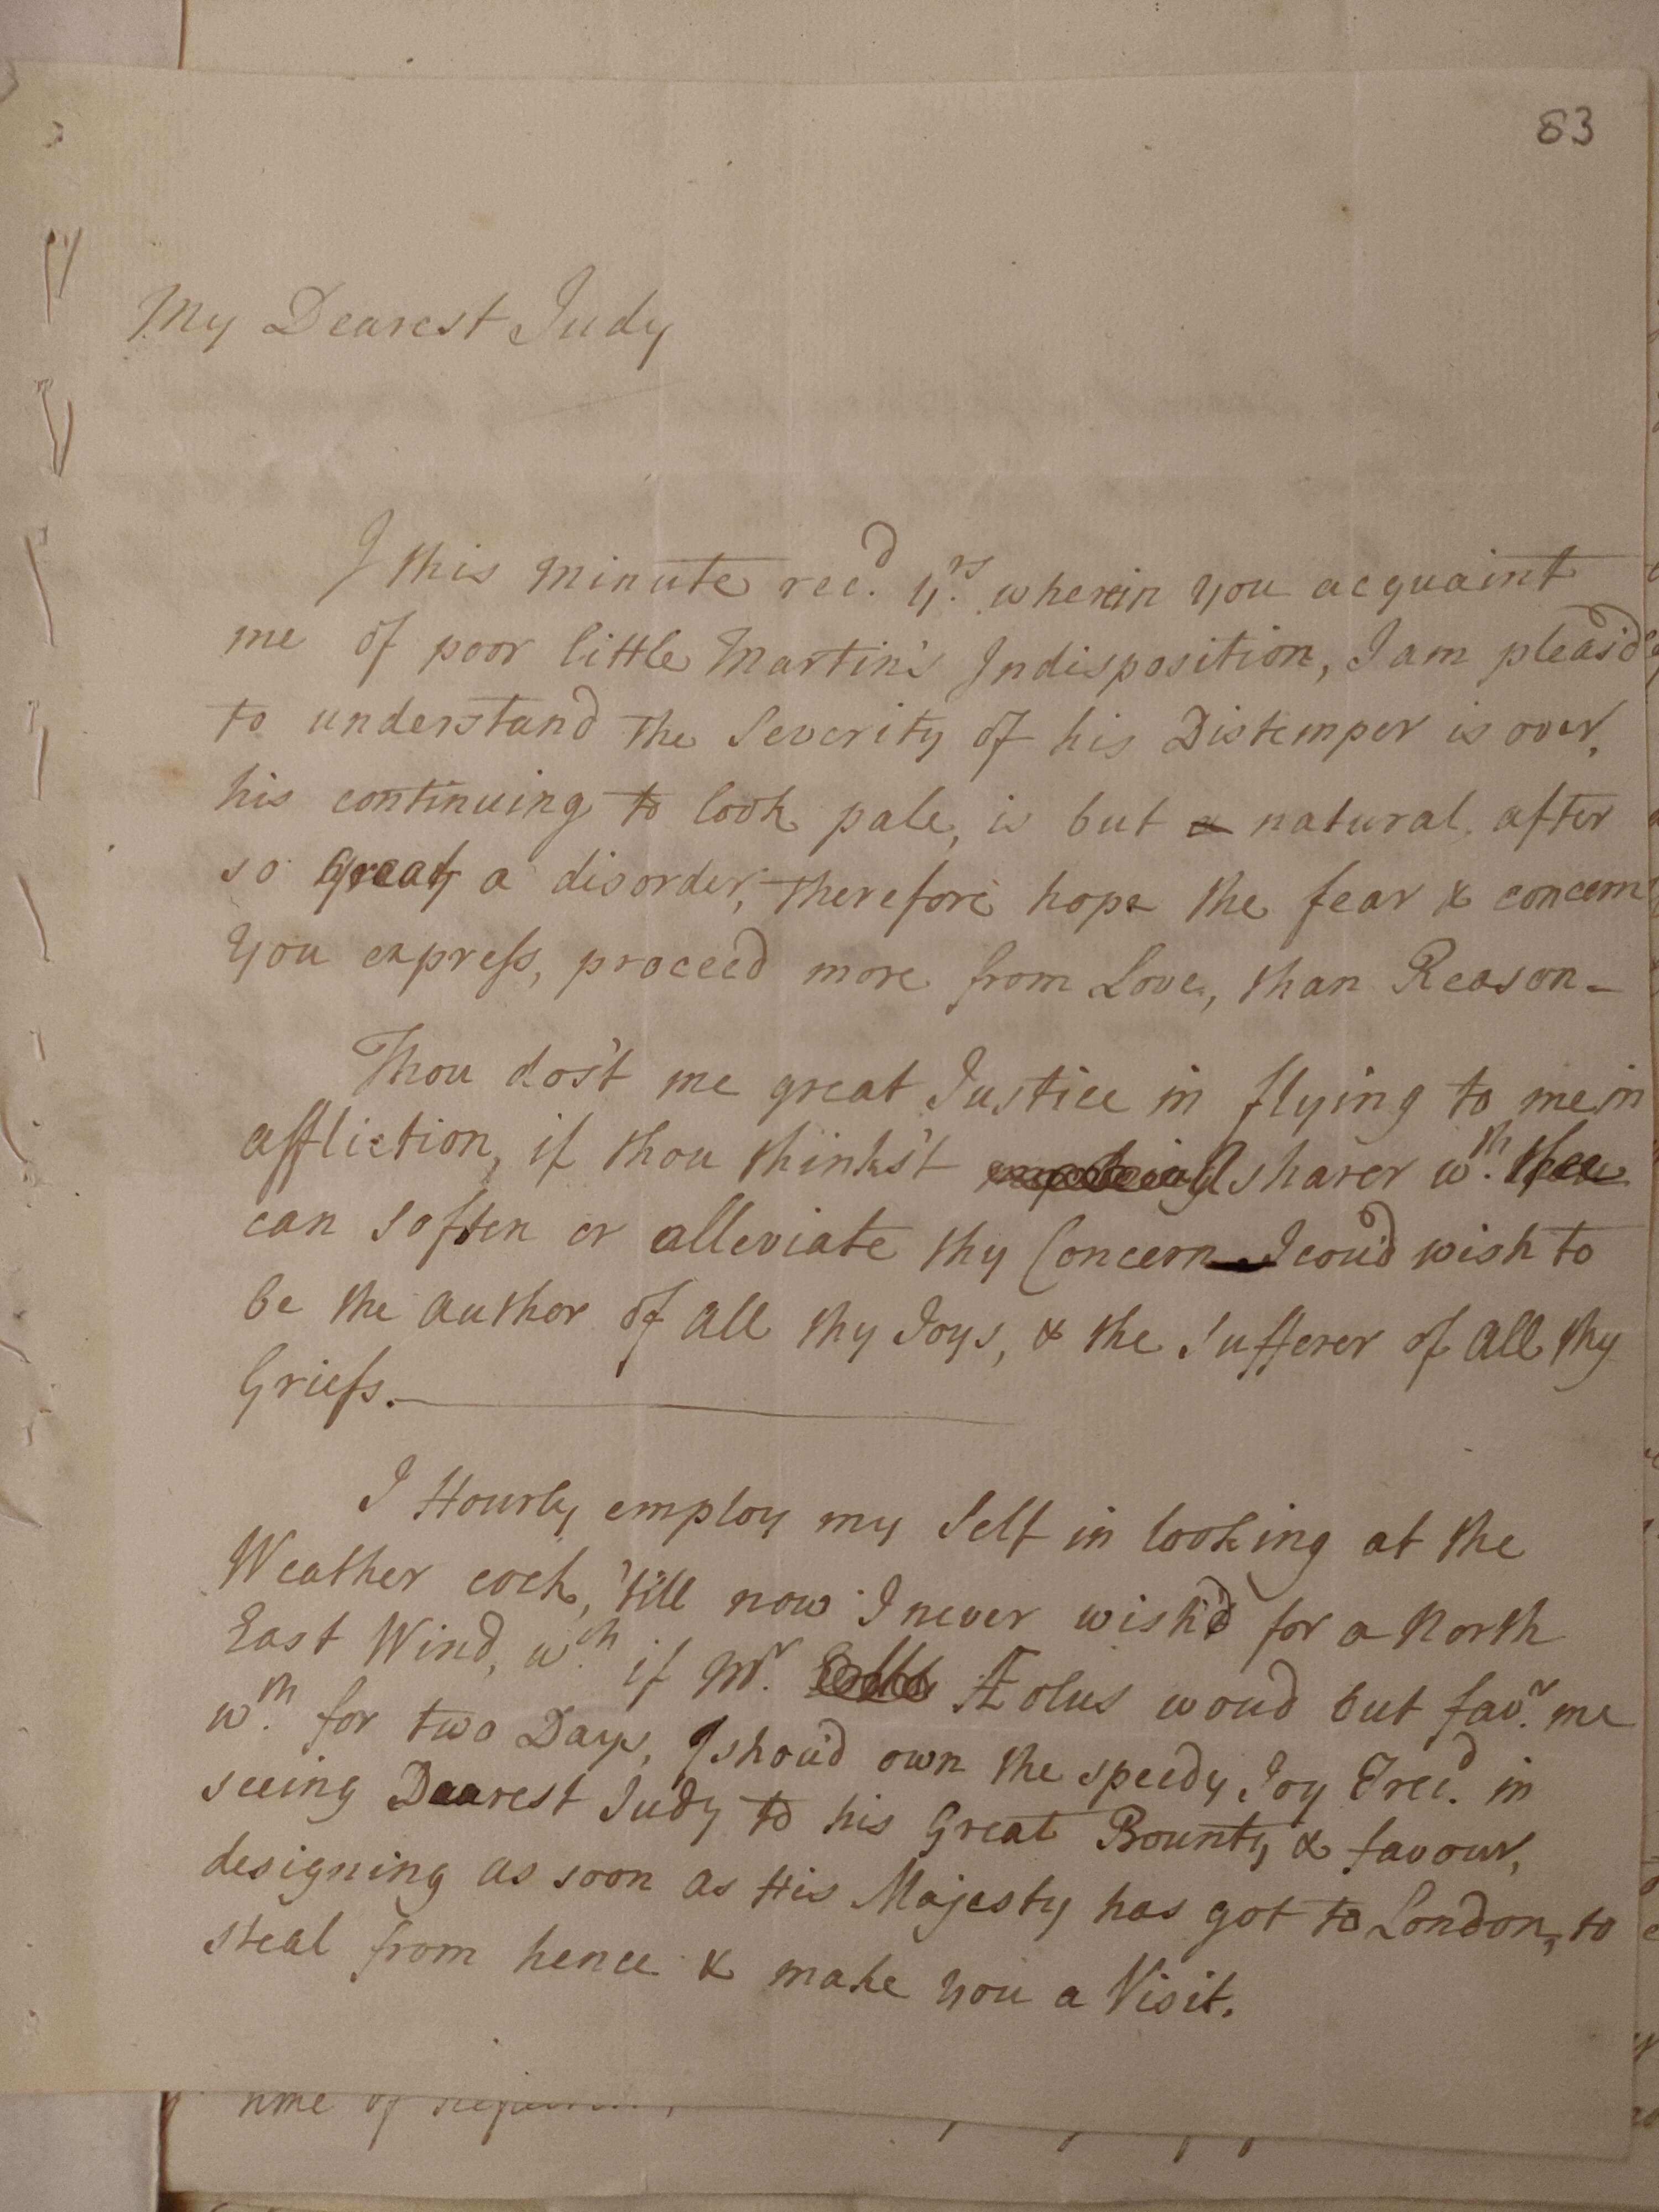 Image #1 of letter: Martin Madan to Judith Madan, 23 December 1725